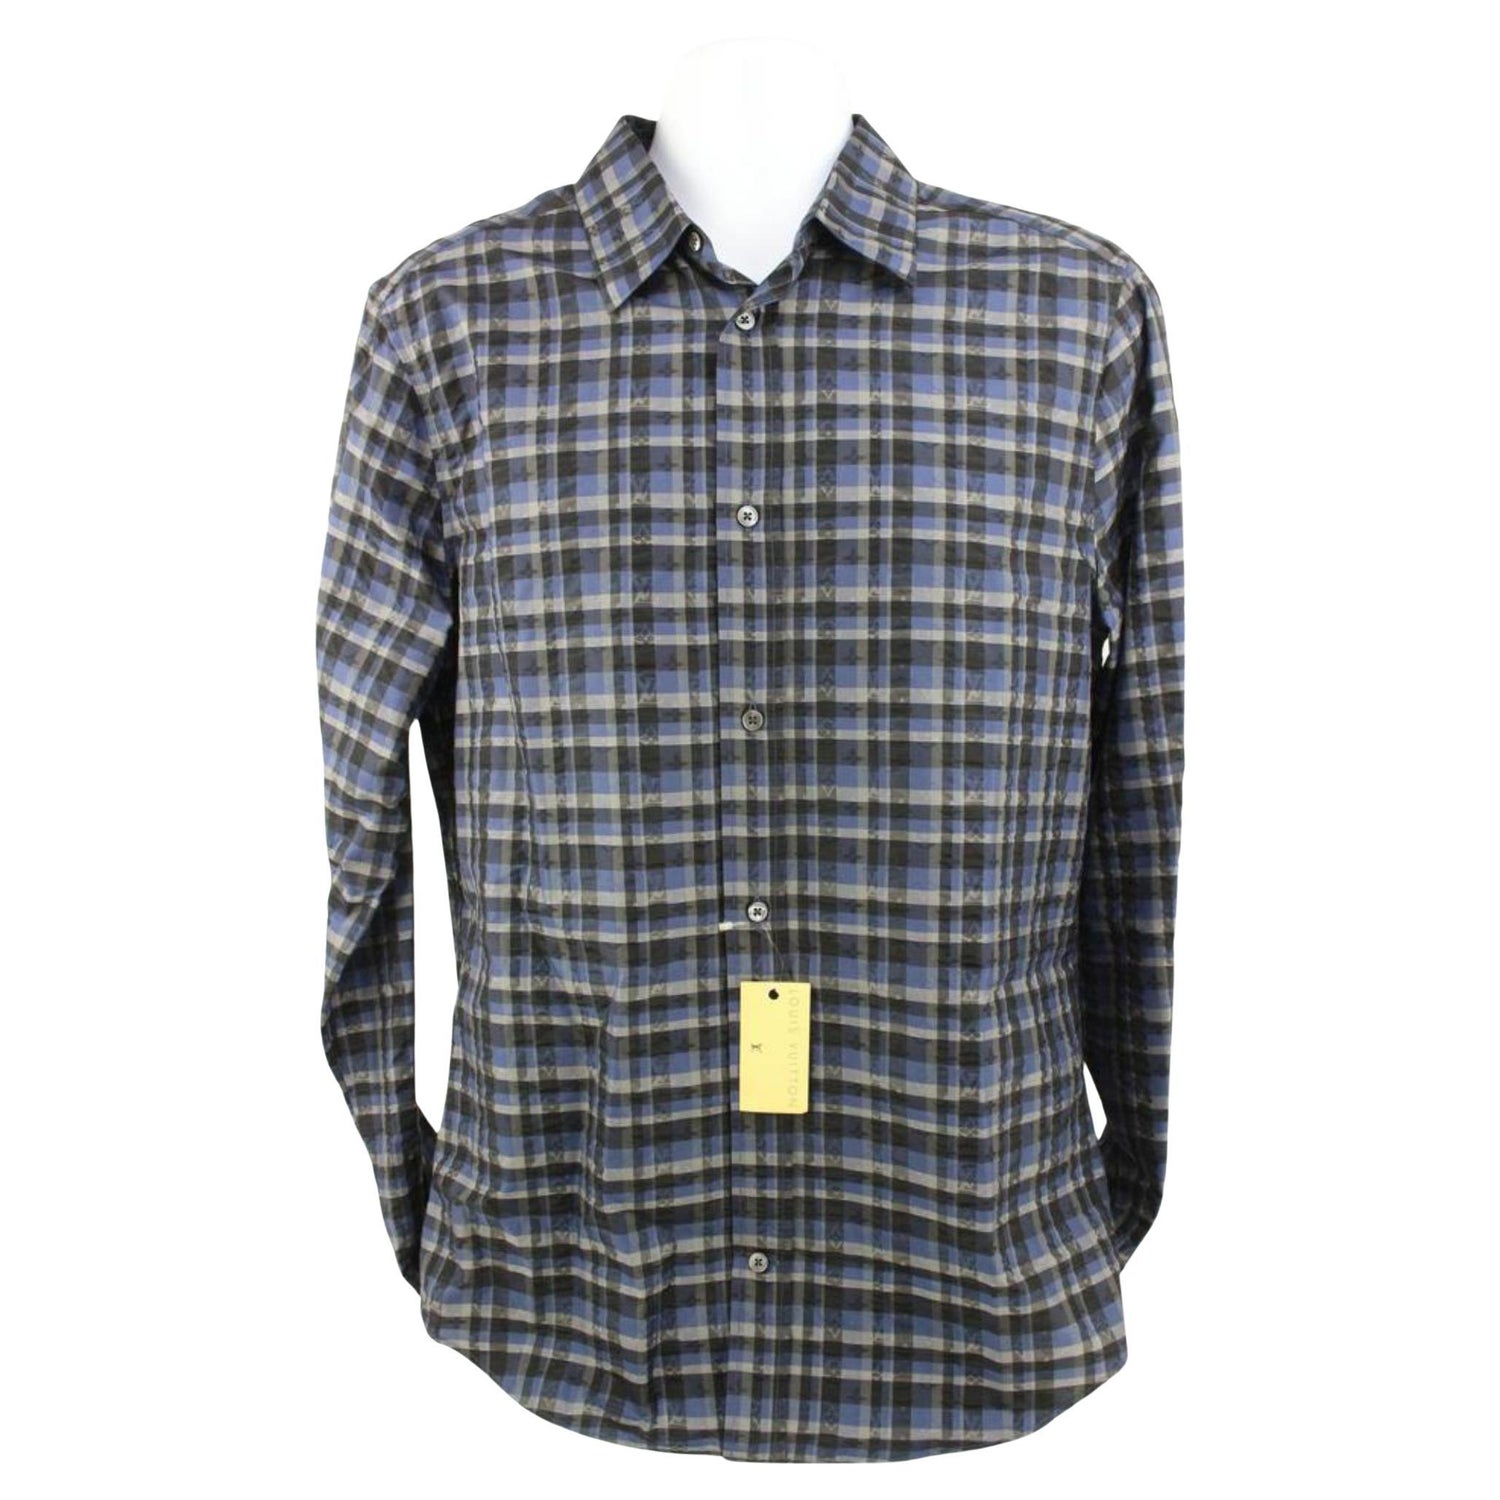 Louis Vuitton Tees - Long Sleeve Shirts for Men - Poshmark